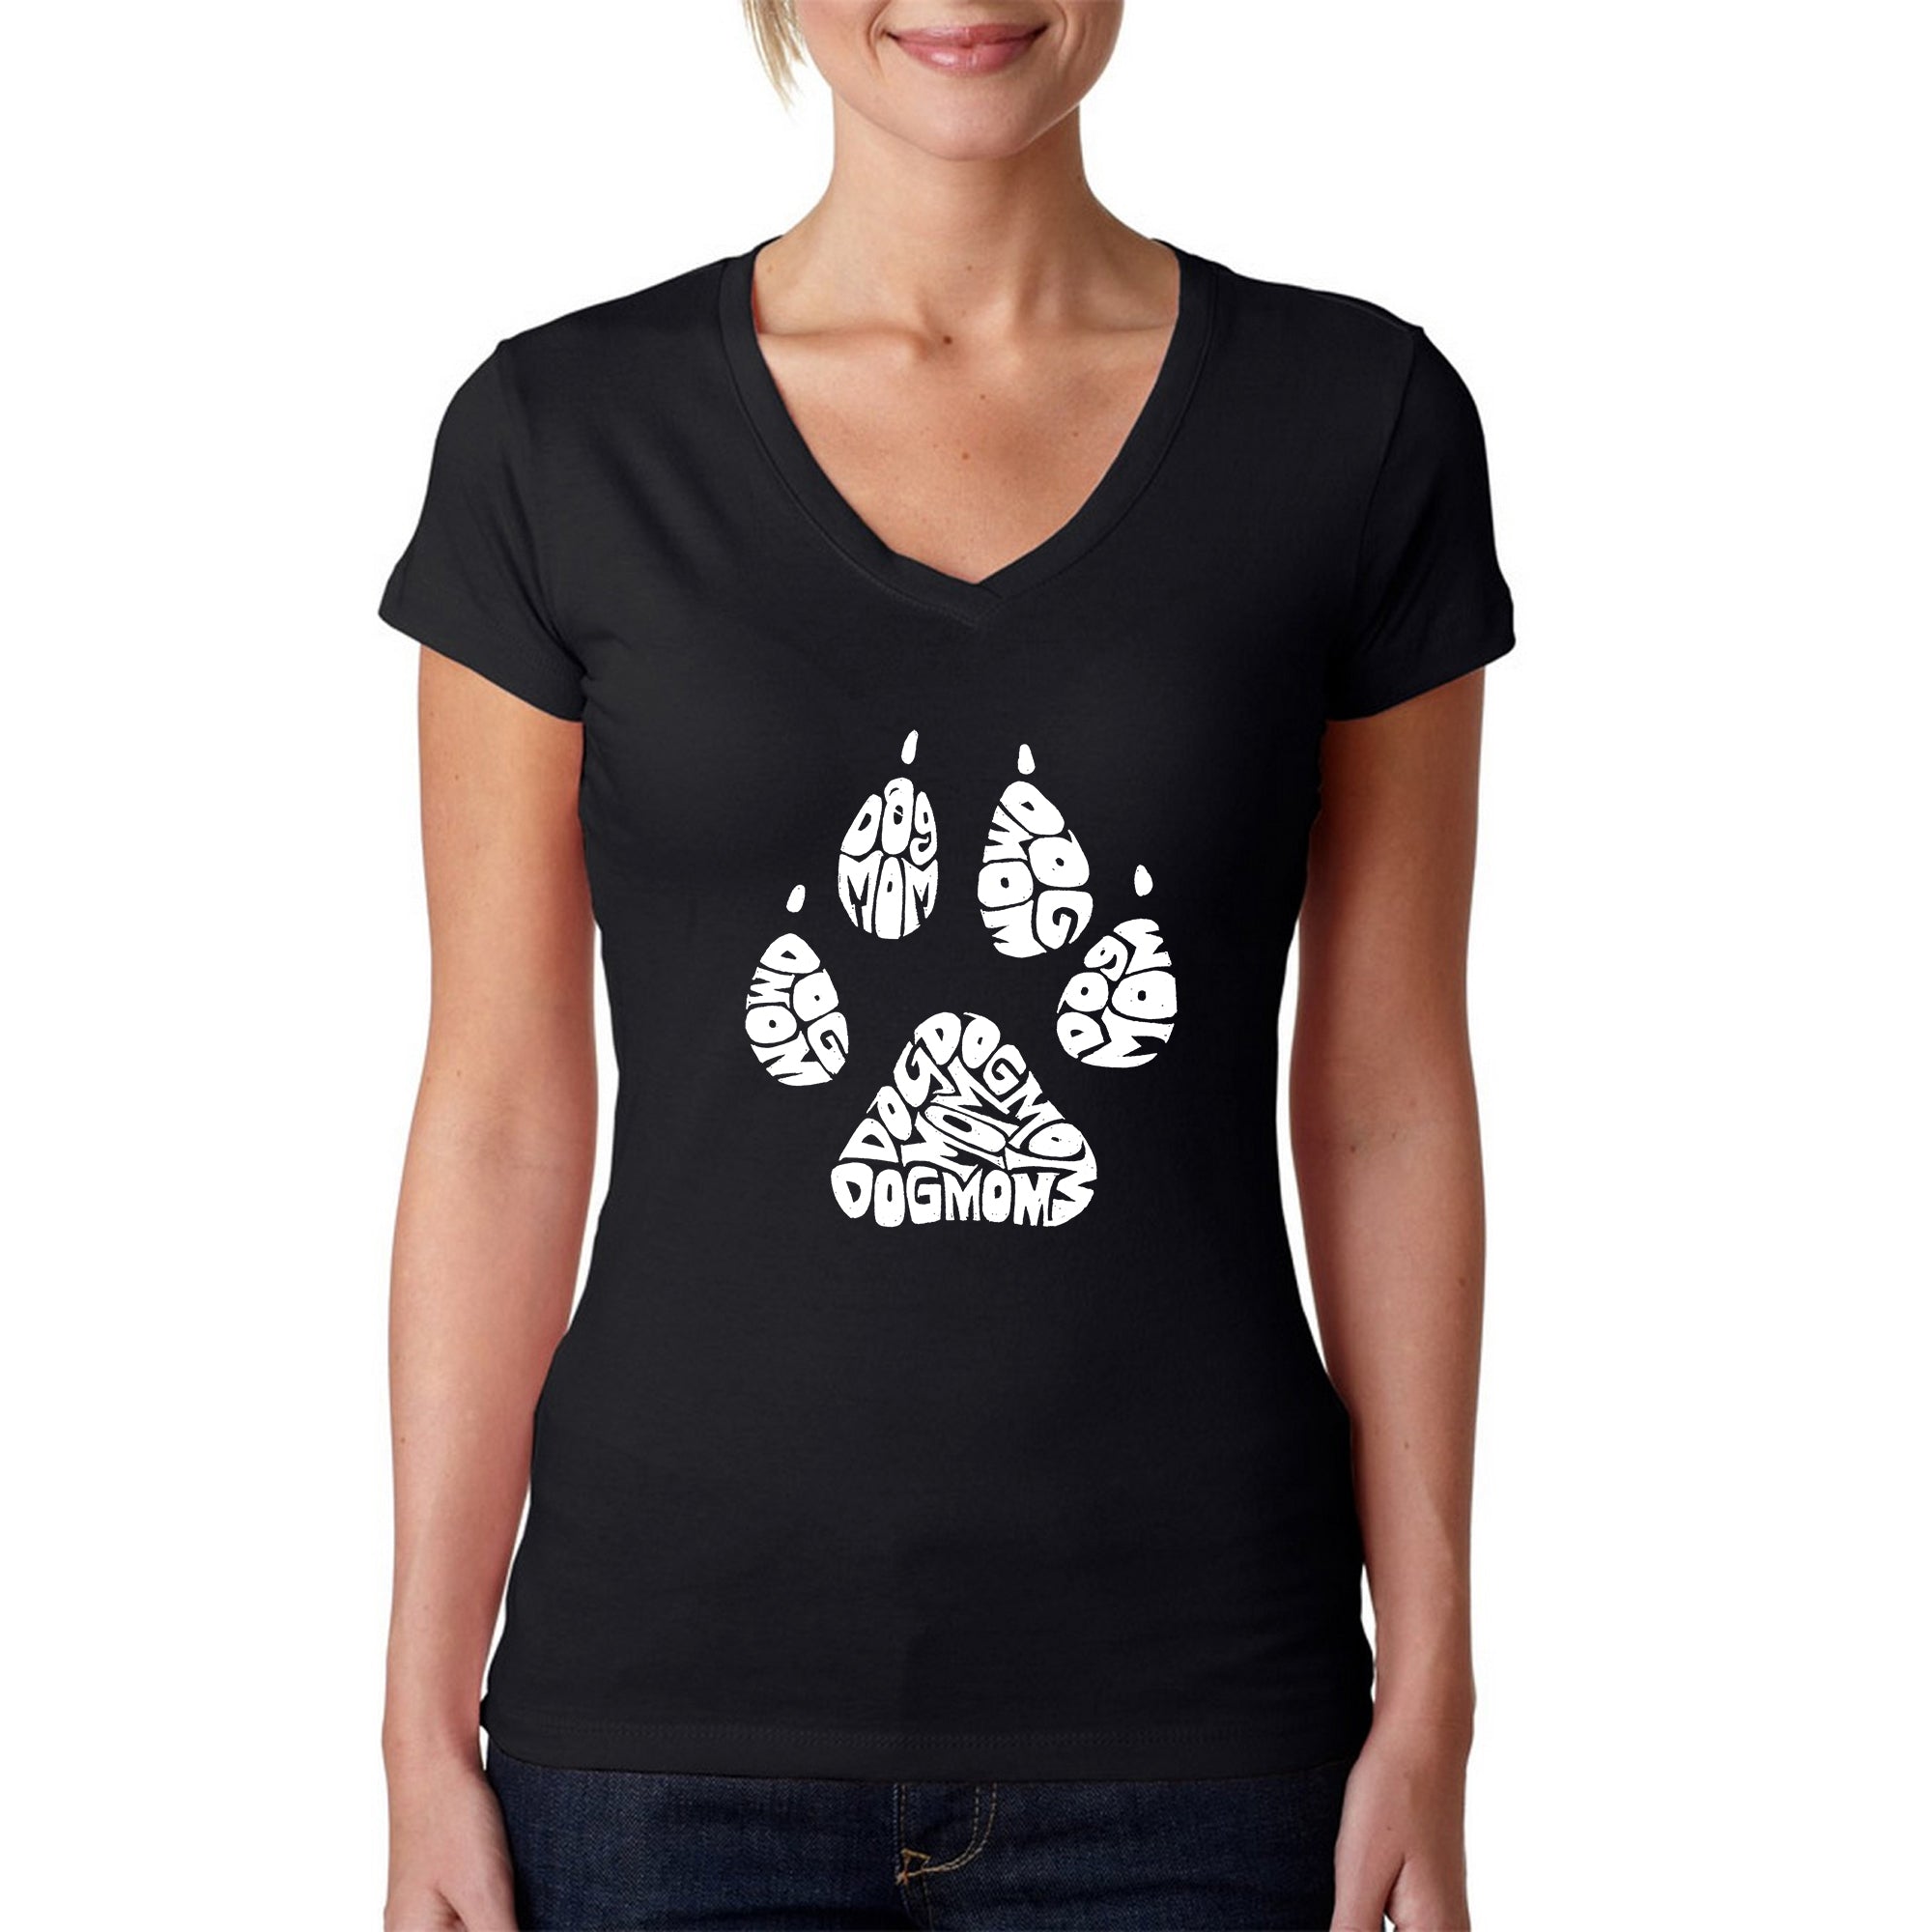 Dog Mom - Women's Word Art V-Neck T-Shirt - Black - XX-Large